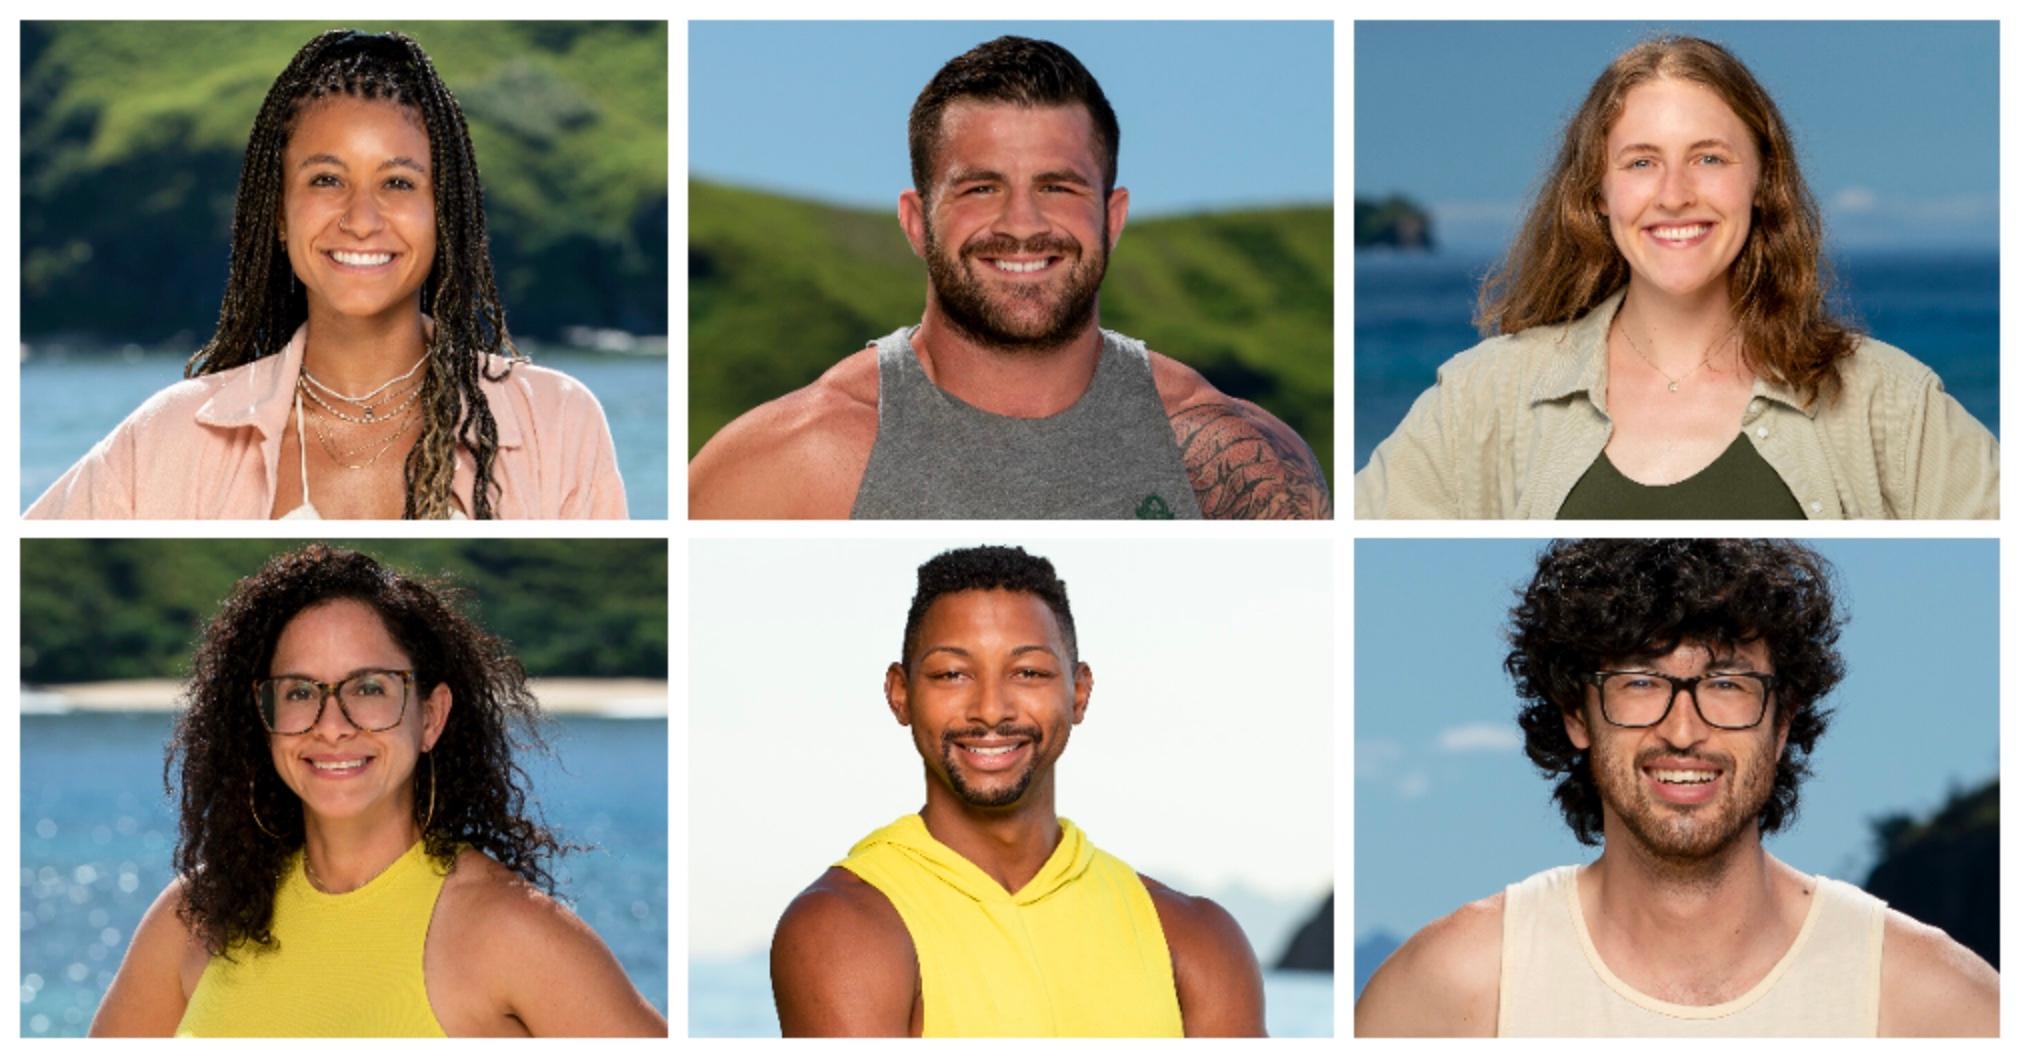 The Survivor 44 cast revealed